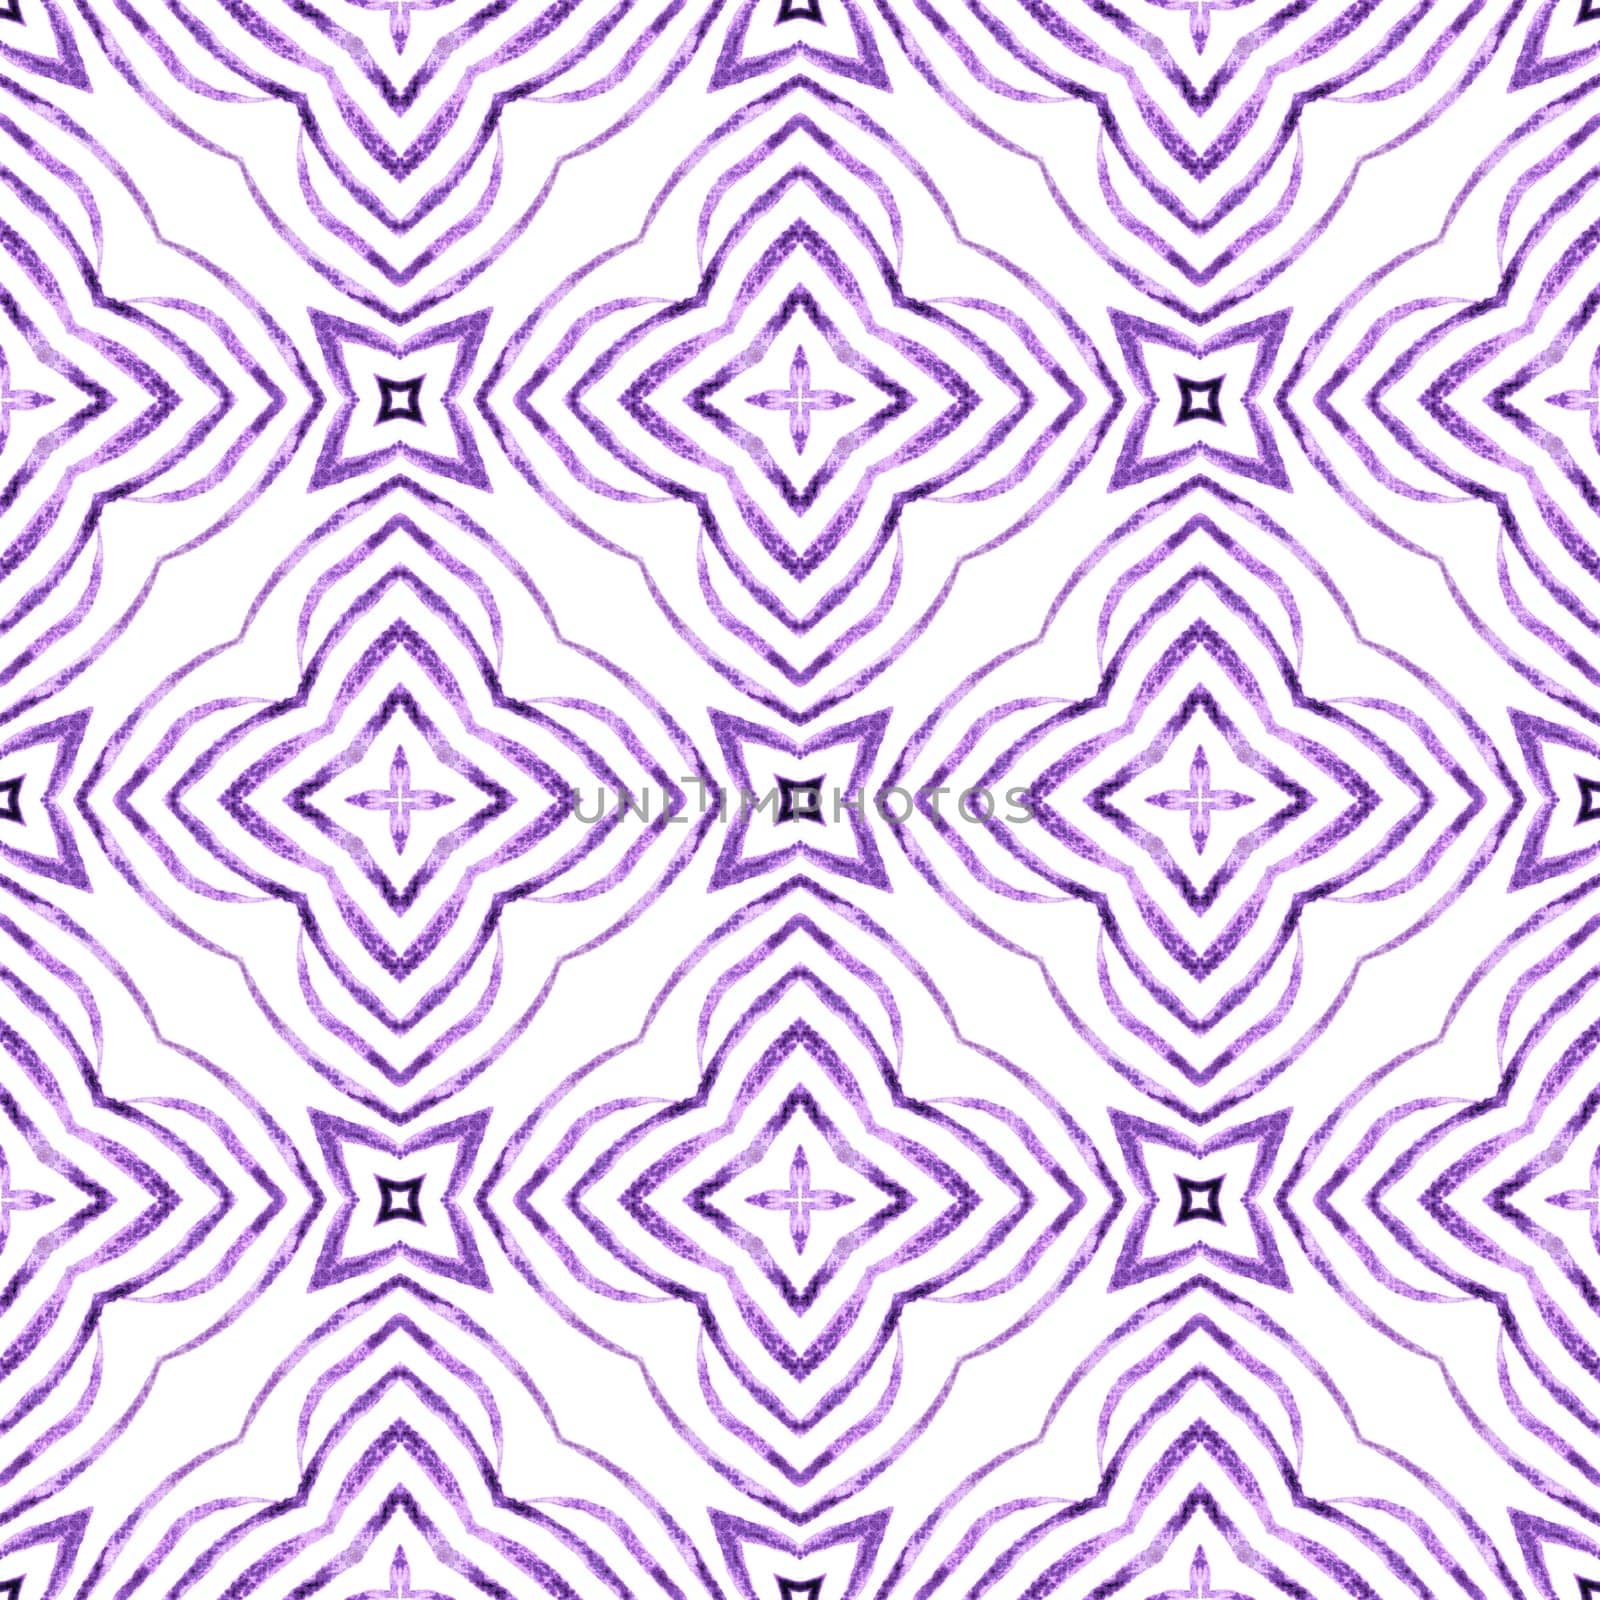 Textile ready emotional print, swimwear fabric, wallpaper, wrapping. Purple enchanting boho chic summer design. Repeating striped hand drawn border. Striped hand drawn design.